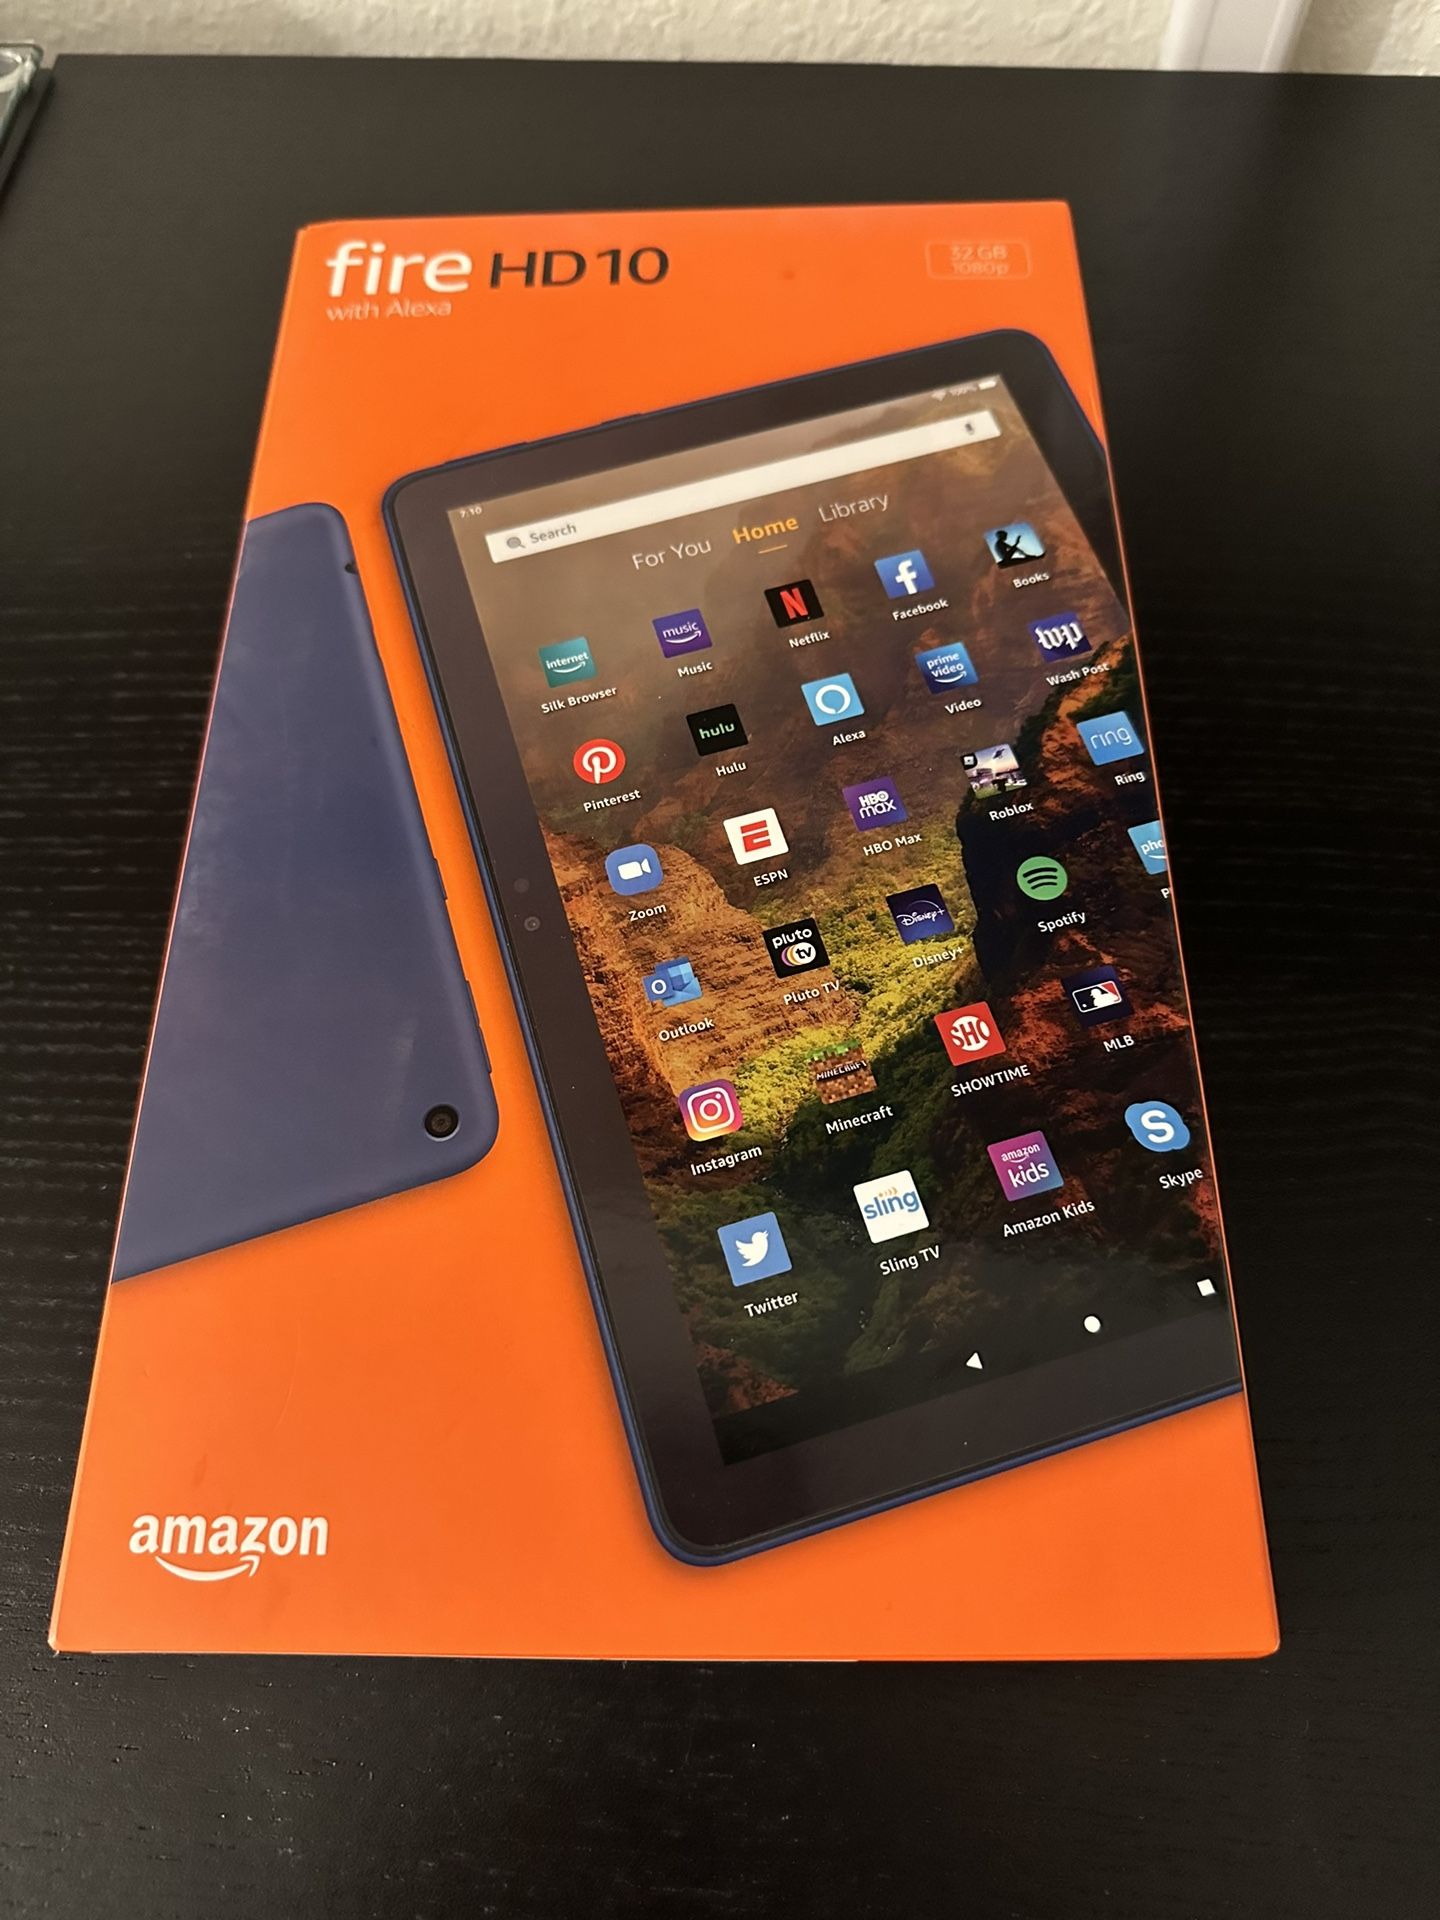 Amazon Fire HD 10 Tablet